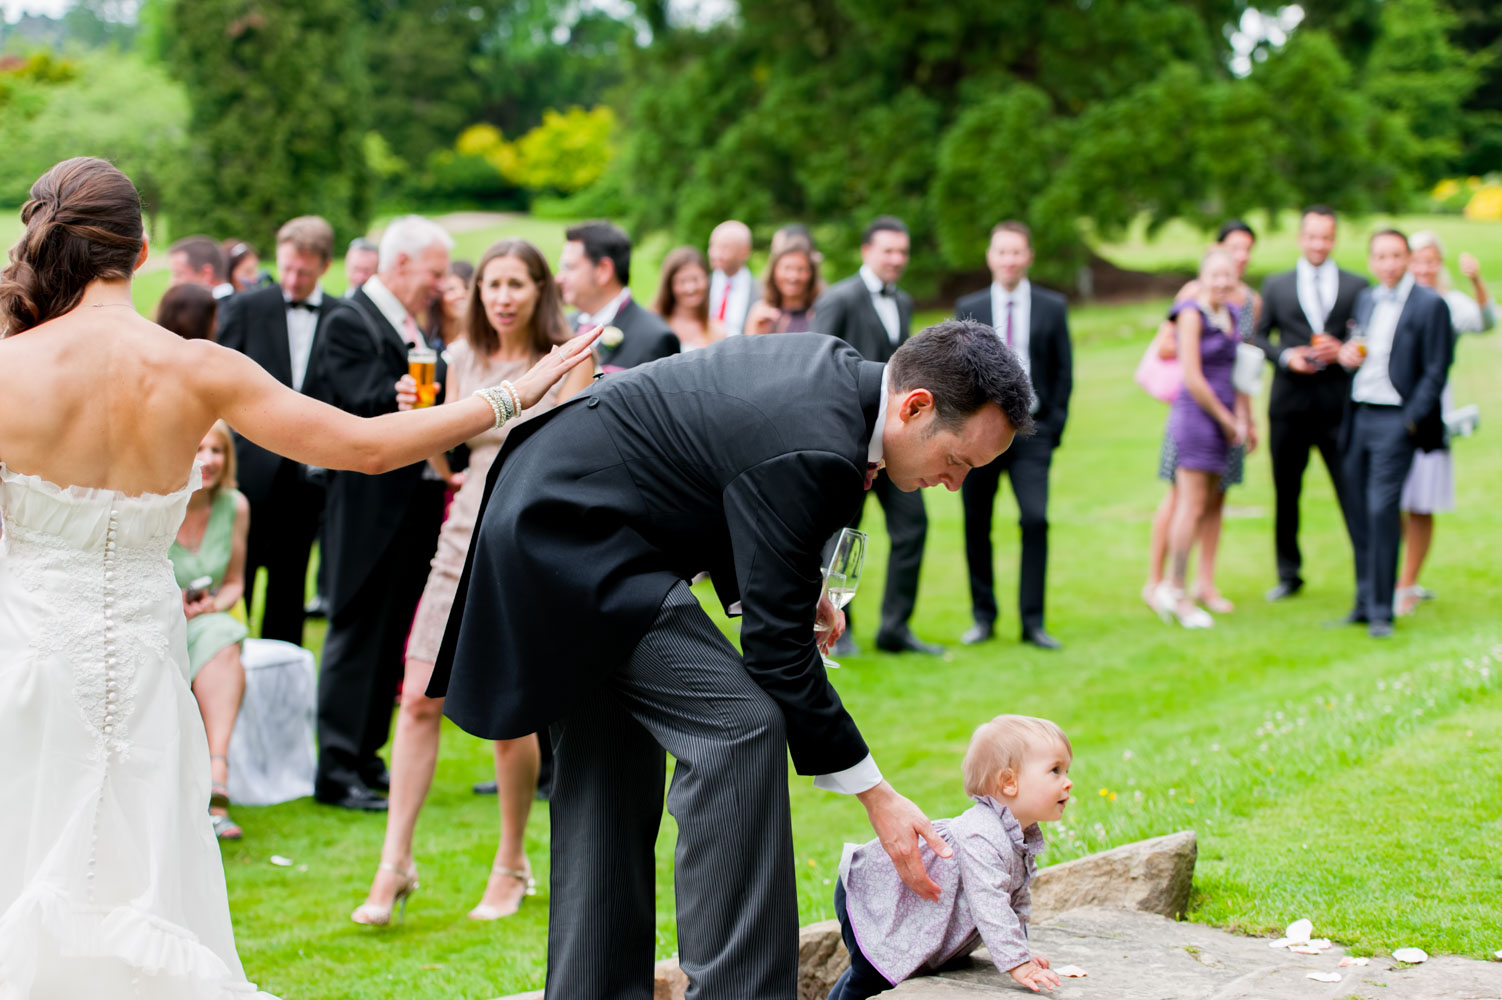 Bride groom and daughter at outdoor wedding reception